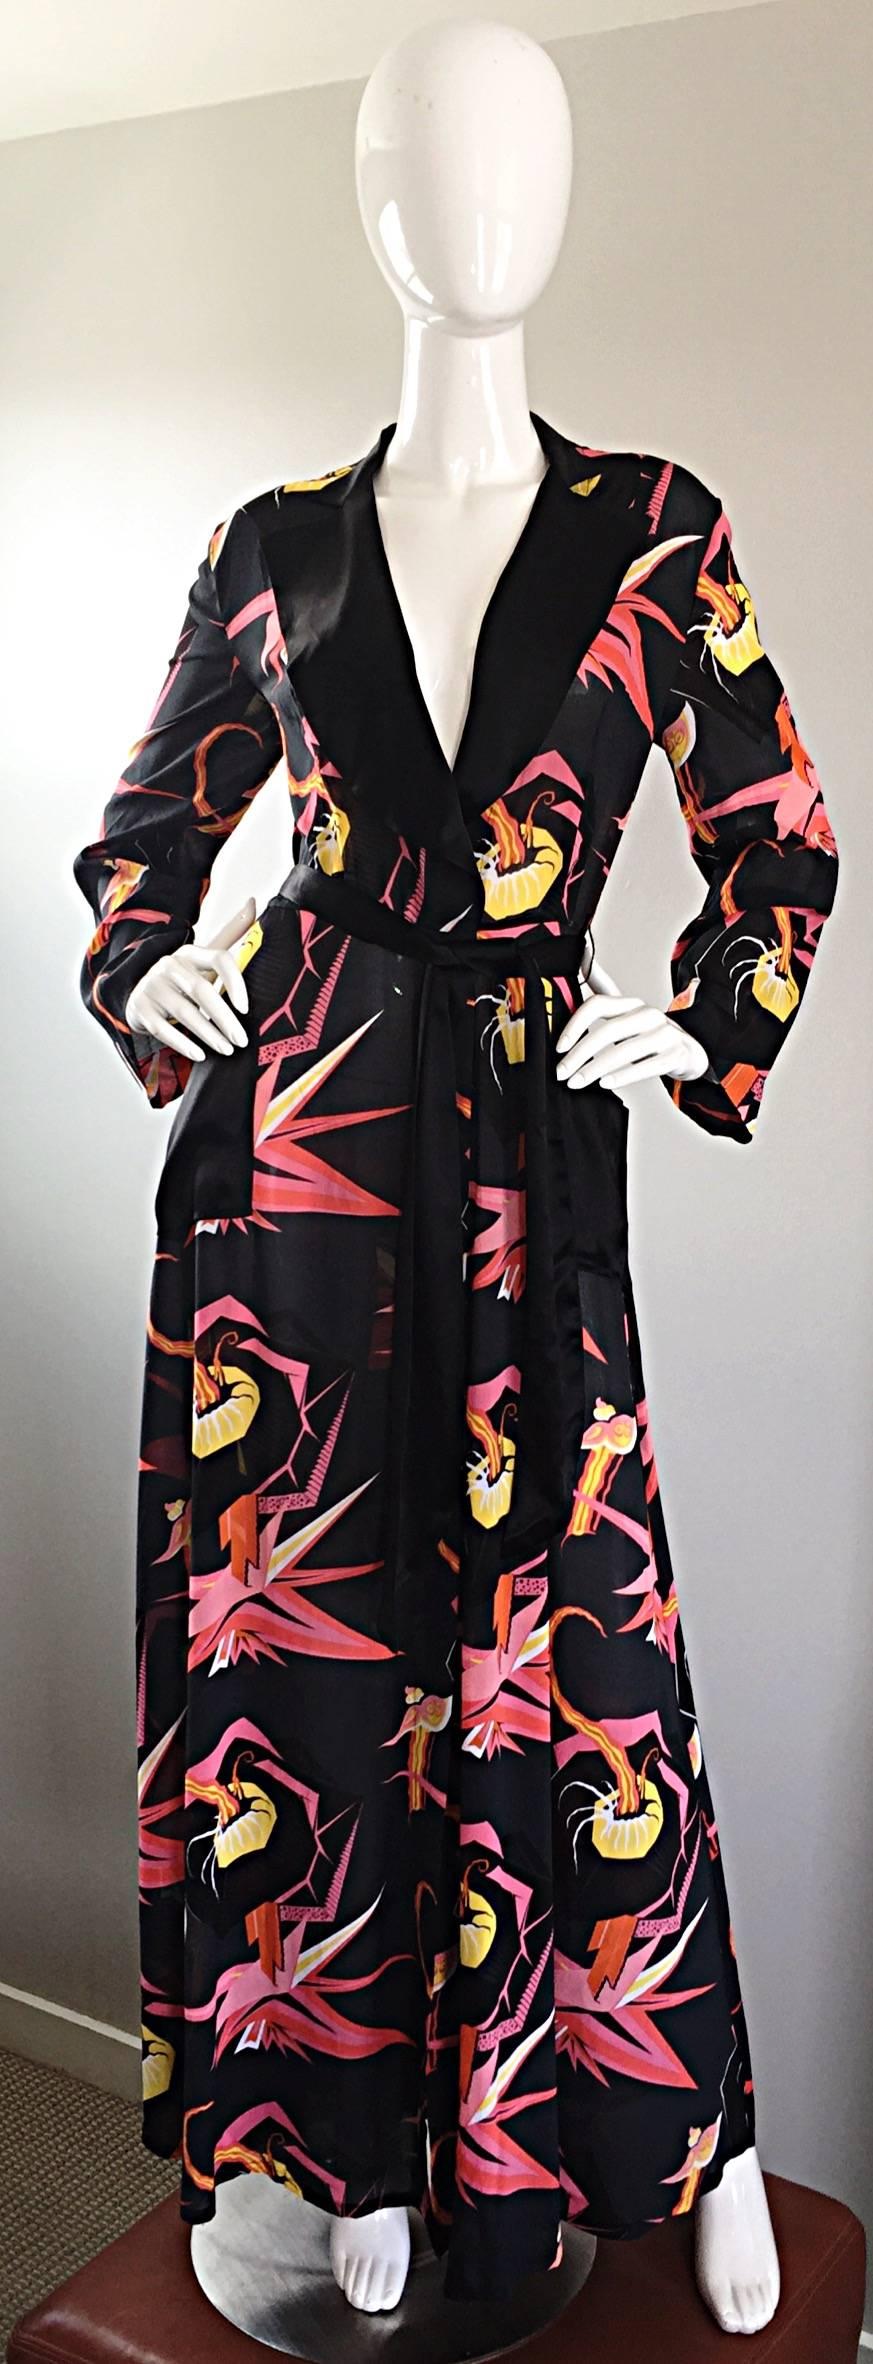 Agent Provocateur Black Japanese Style Dressing Gown Dress Silk Kimono Robe 2